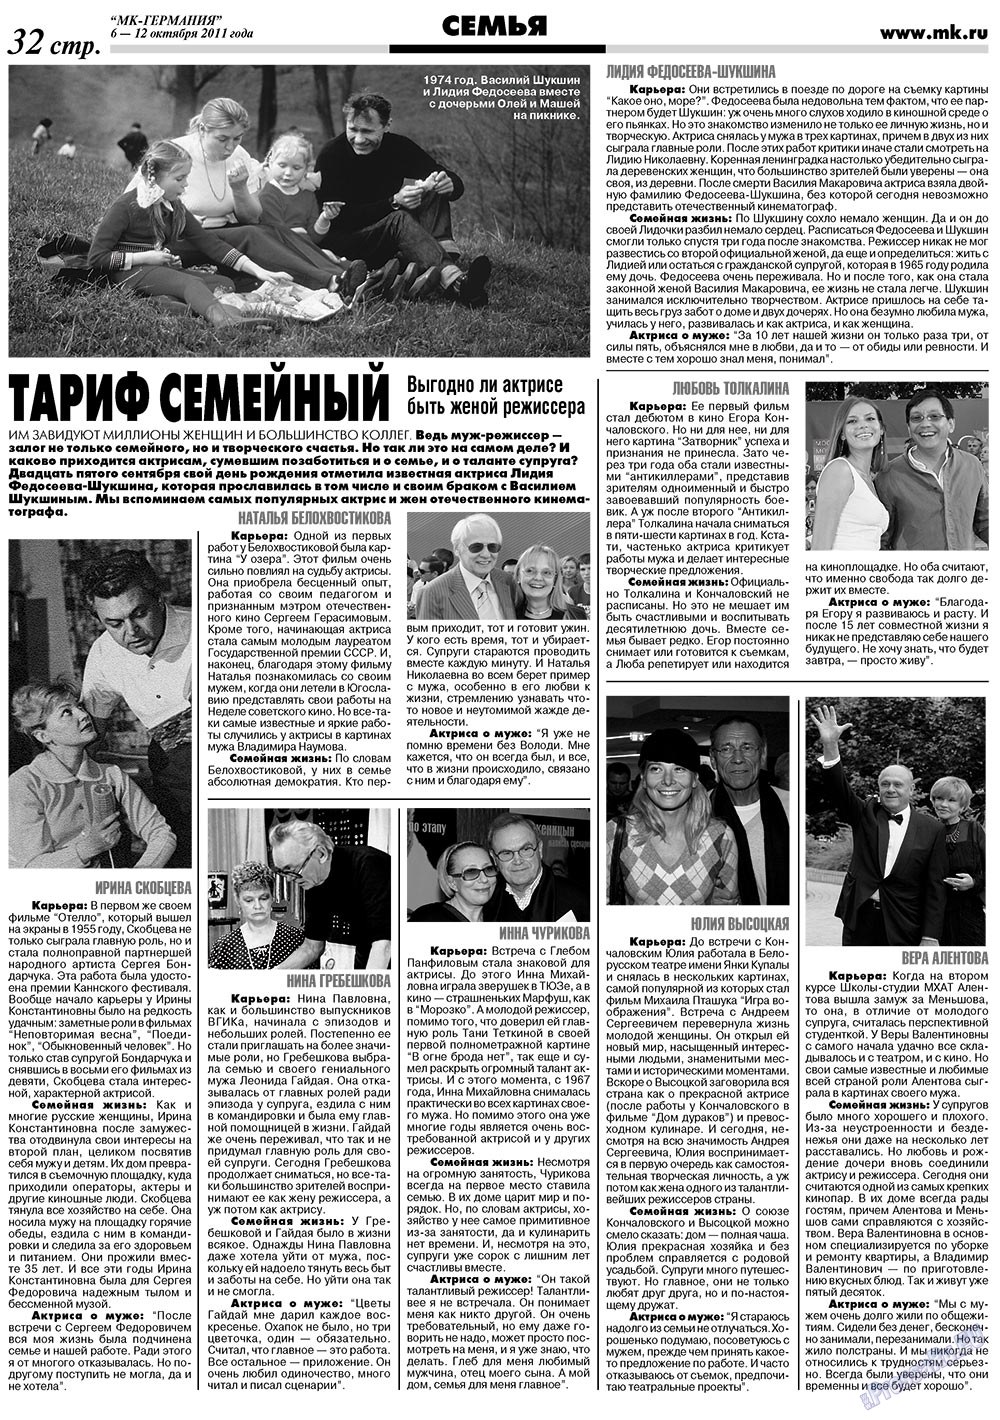 МК-Германия, газета. 2011 №40 стр.32